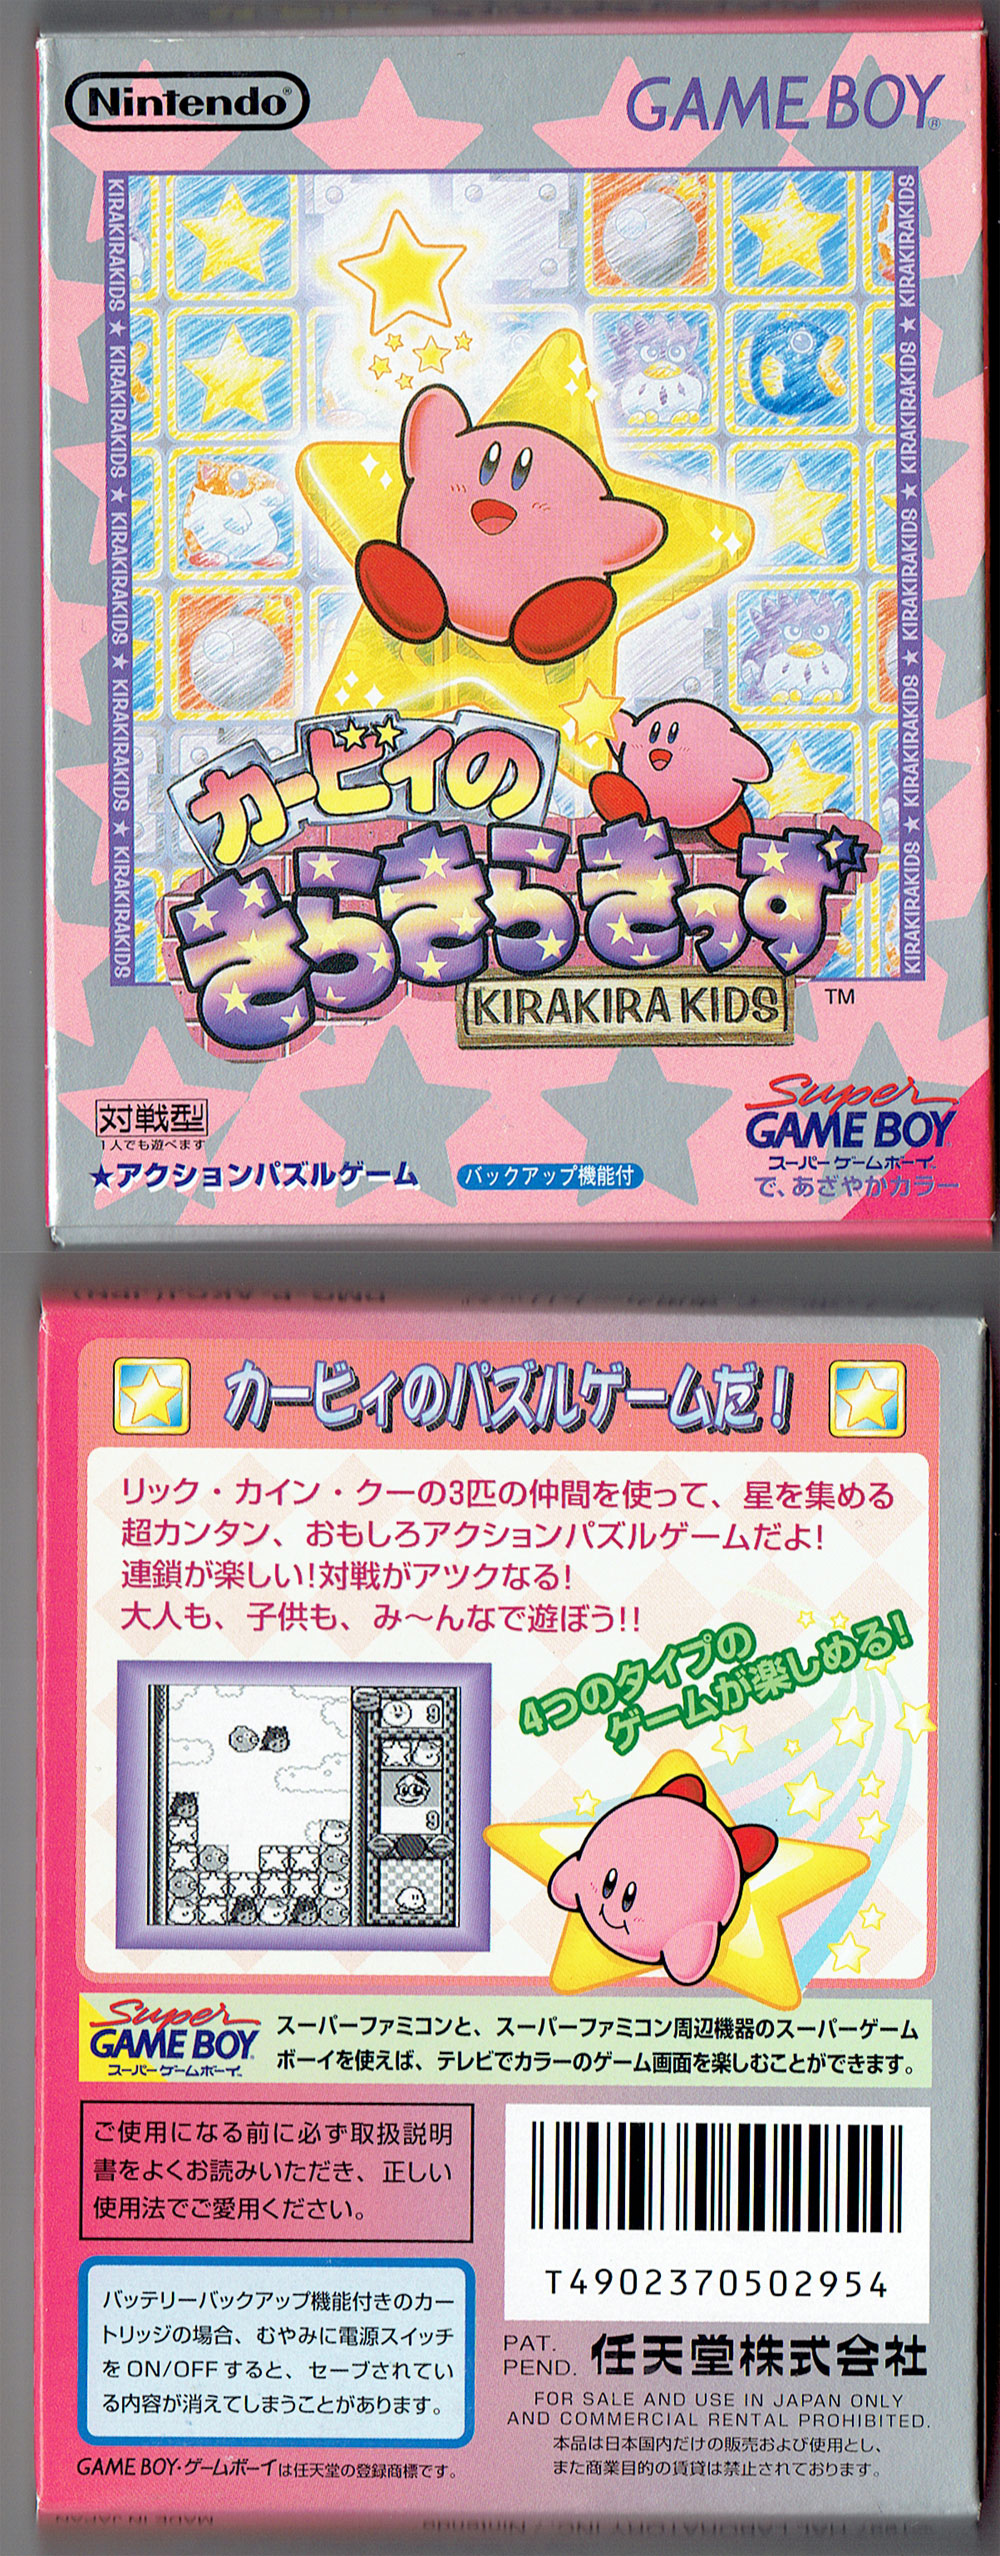 Kirby Kira Kira Kids (New) from Nintendo - GameBoy